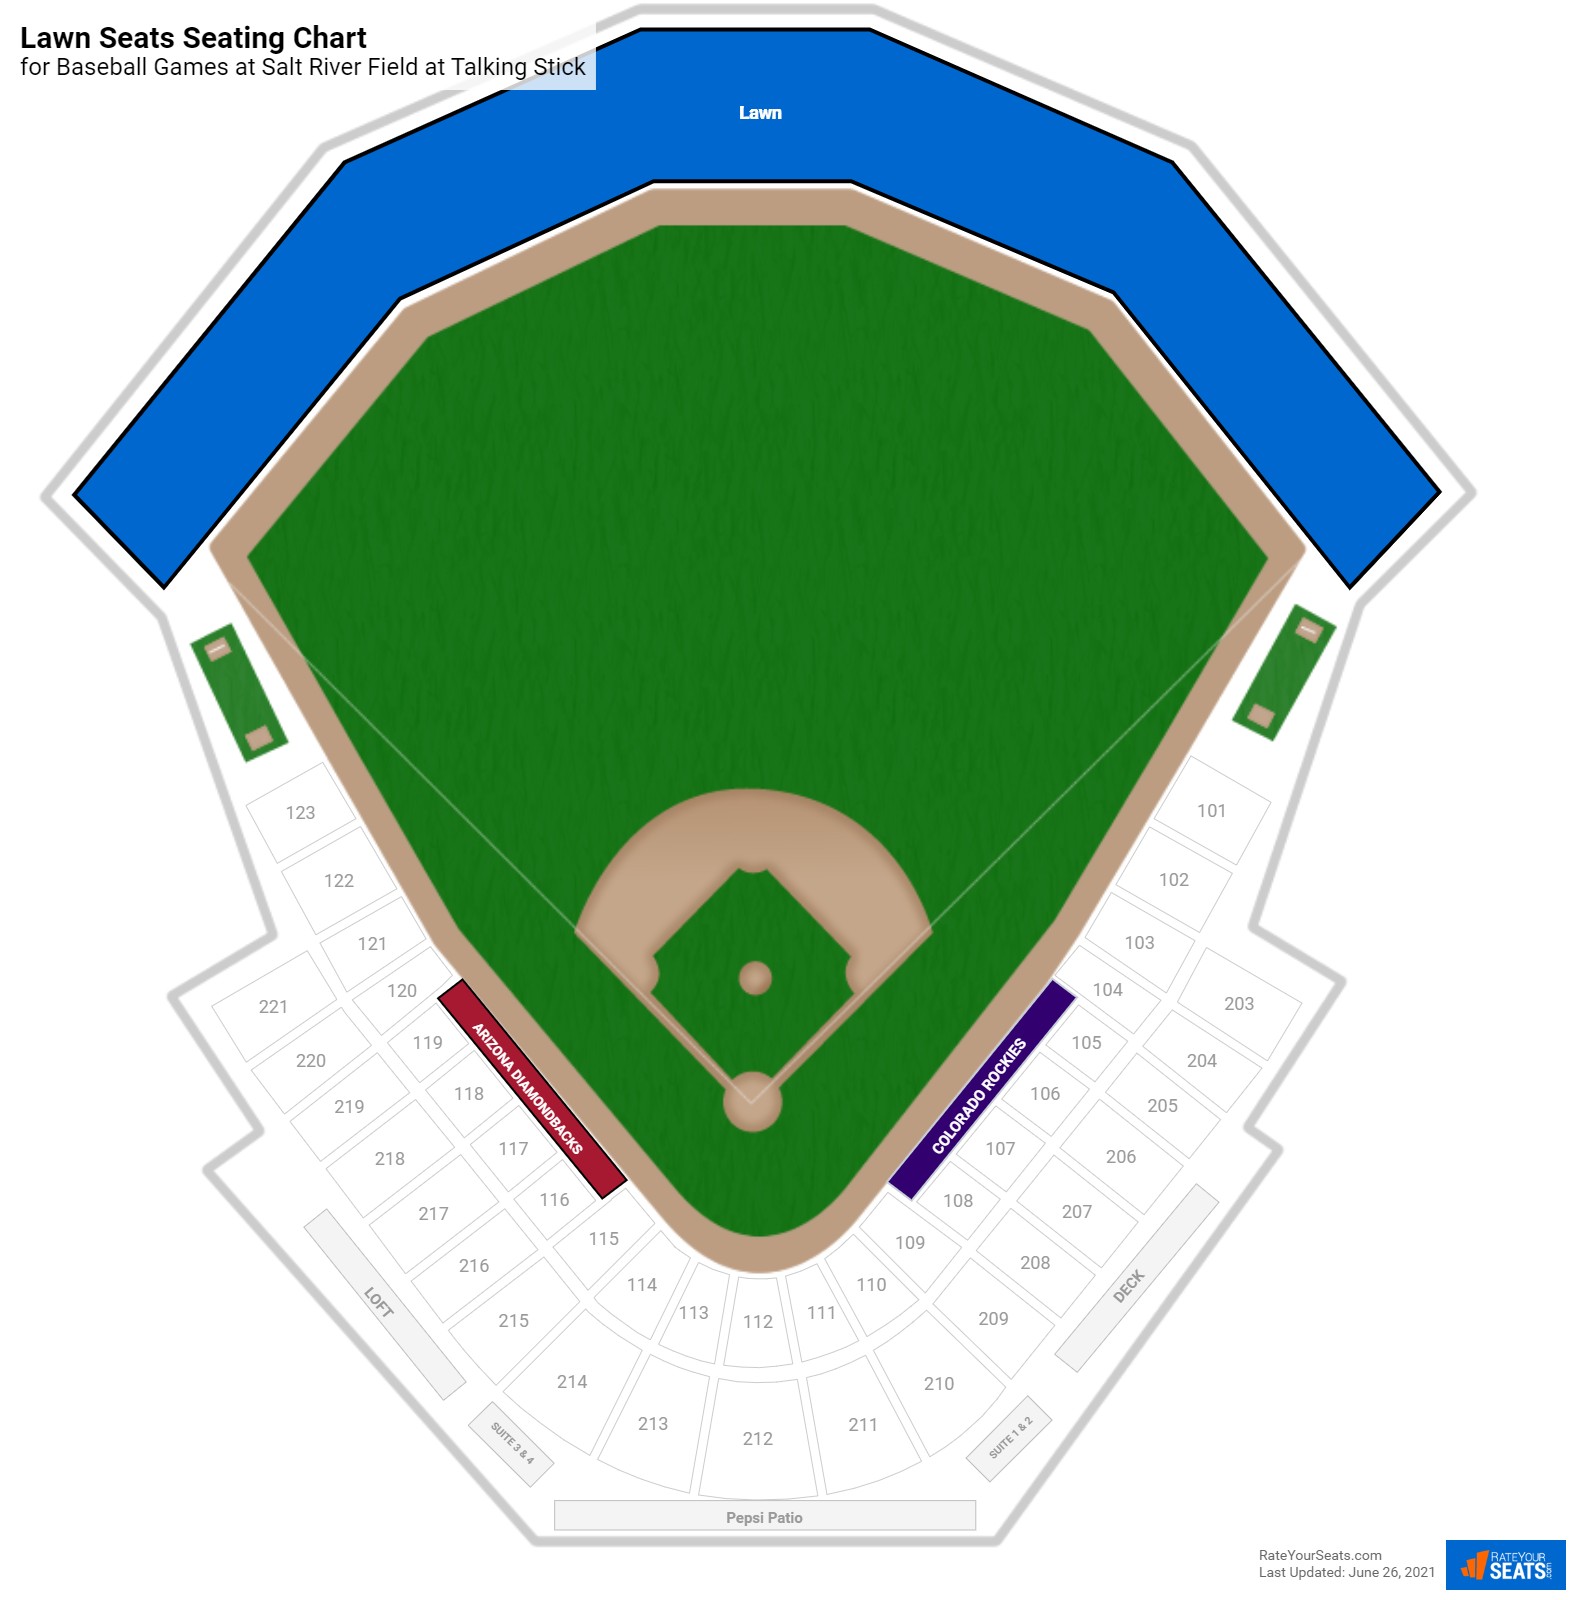 Baseball Lawn Seats Seating Chart at Salt River Field at Talking Stick